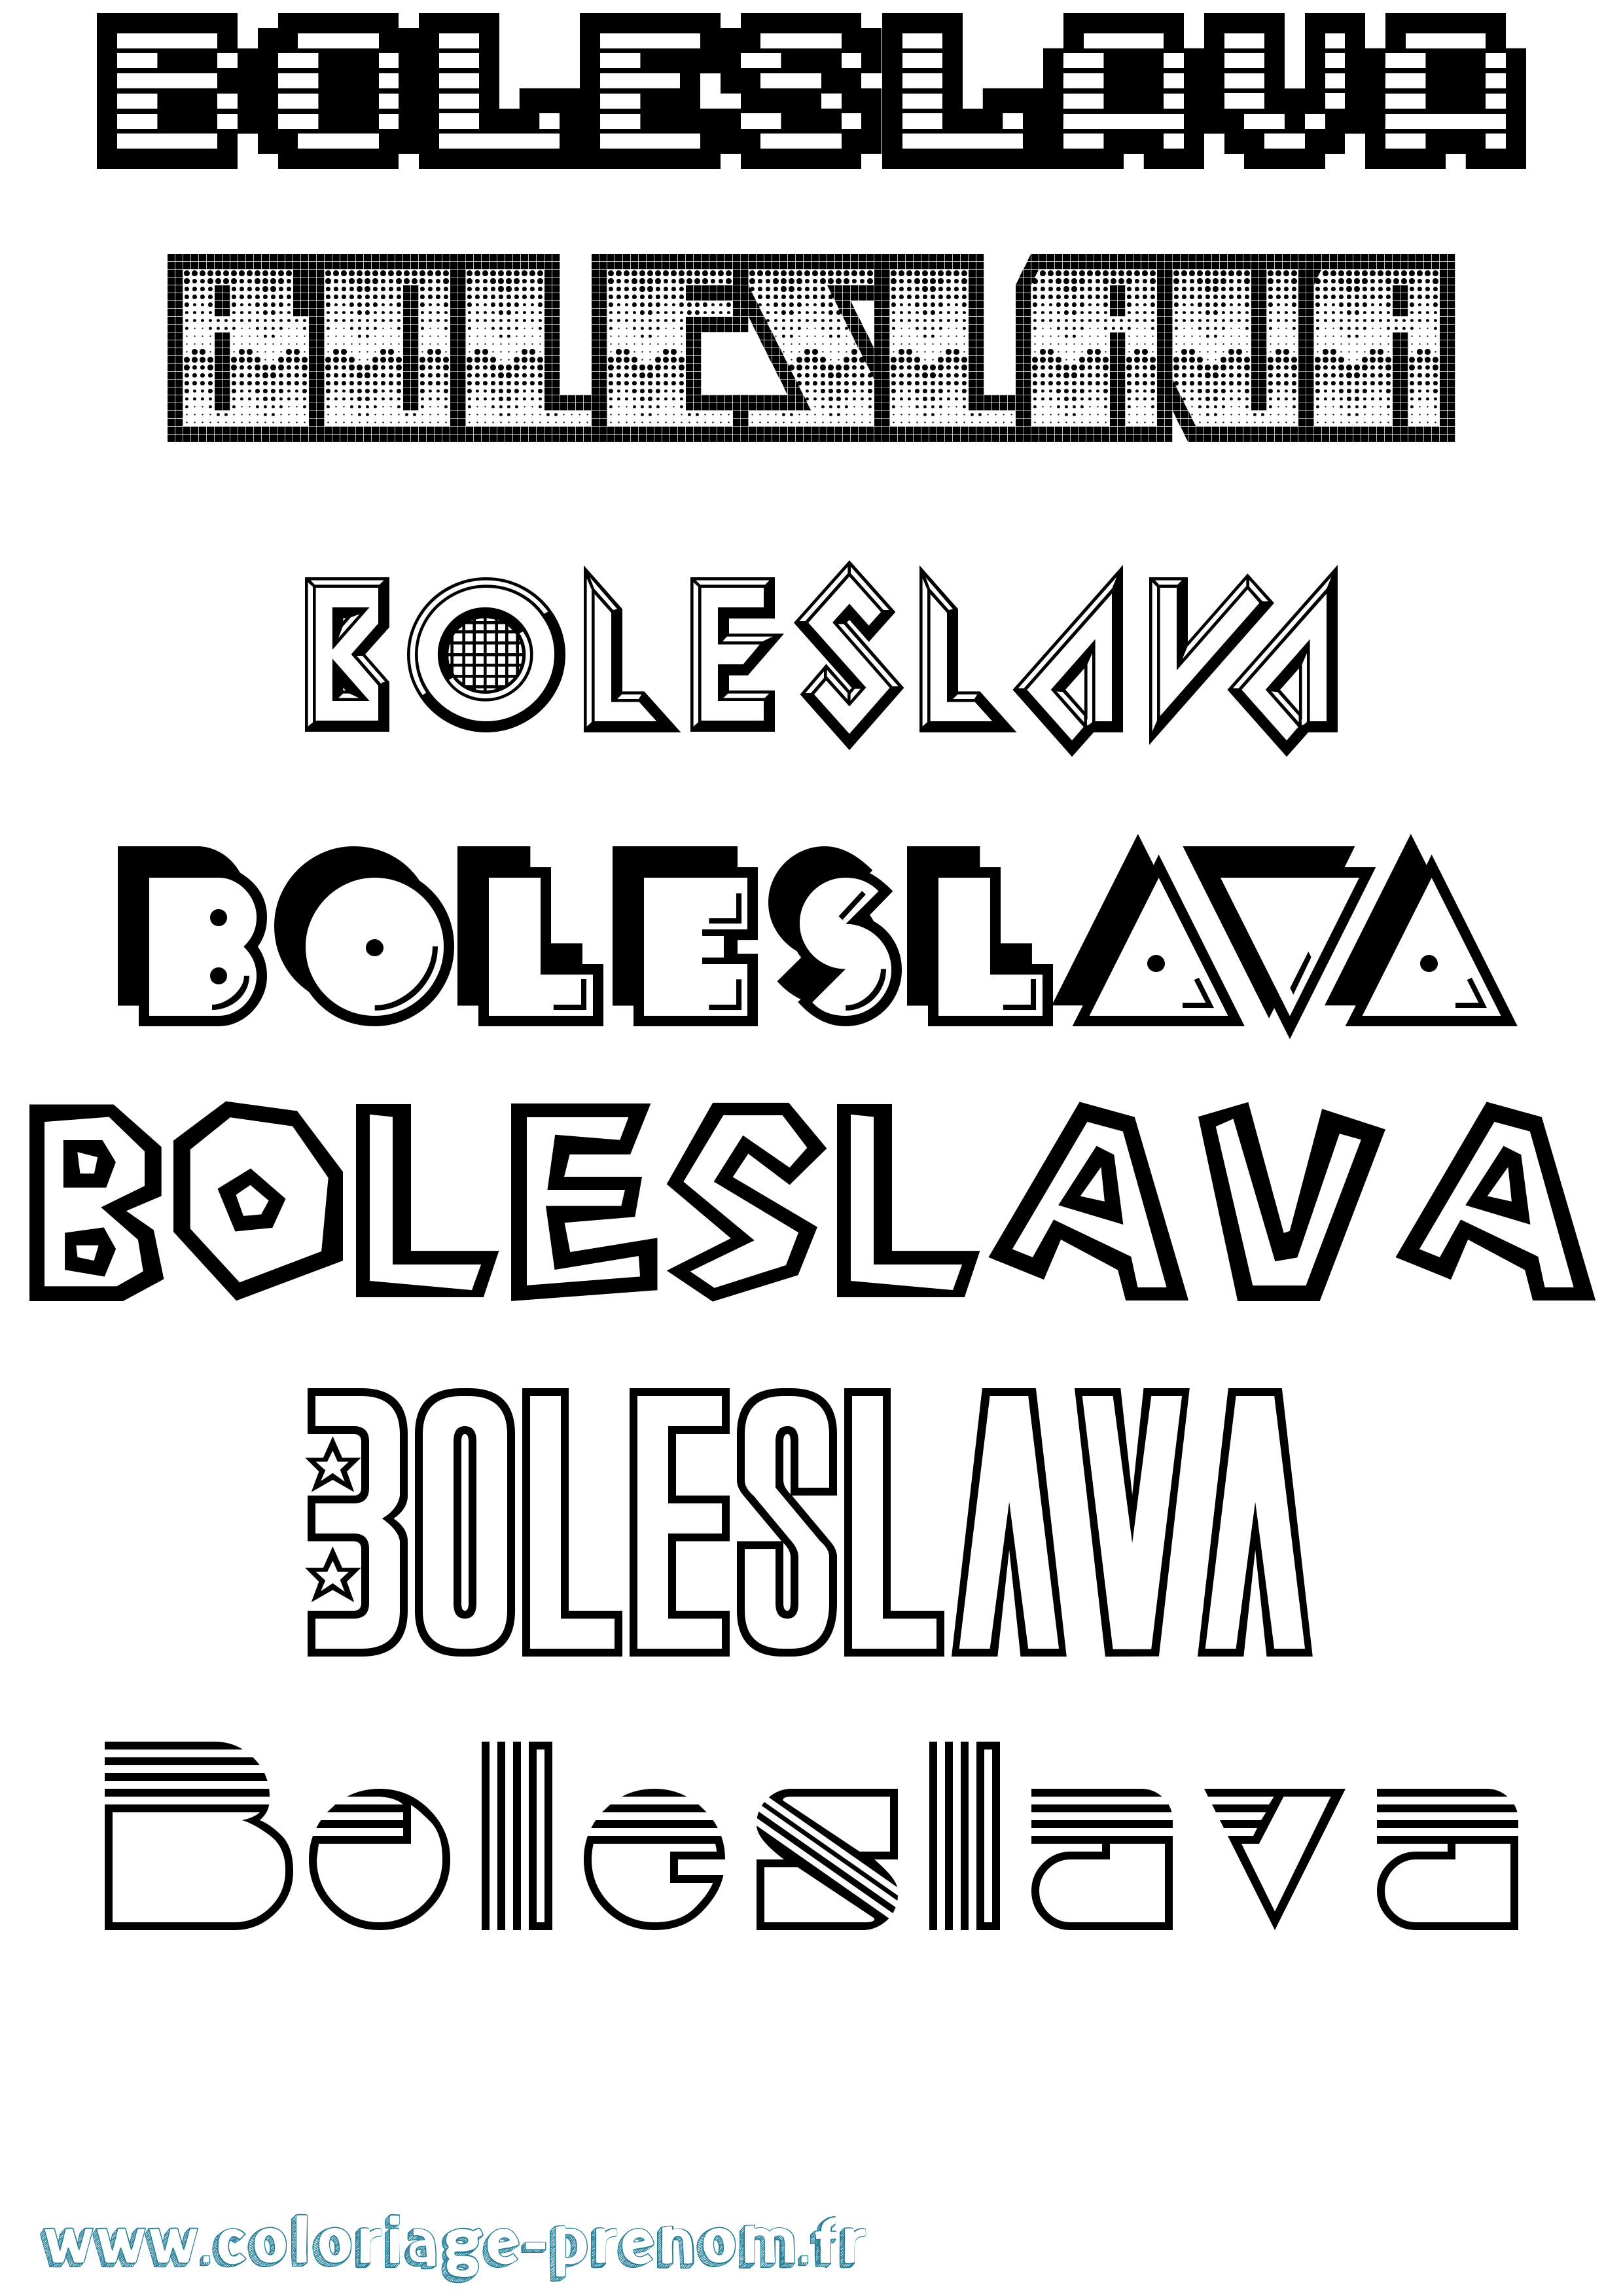 Coloriage prénom Boleslava Jeux Vidéos